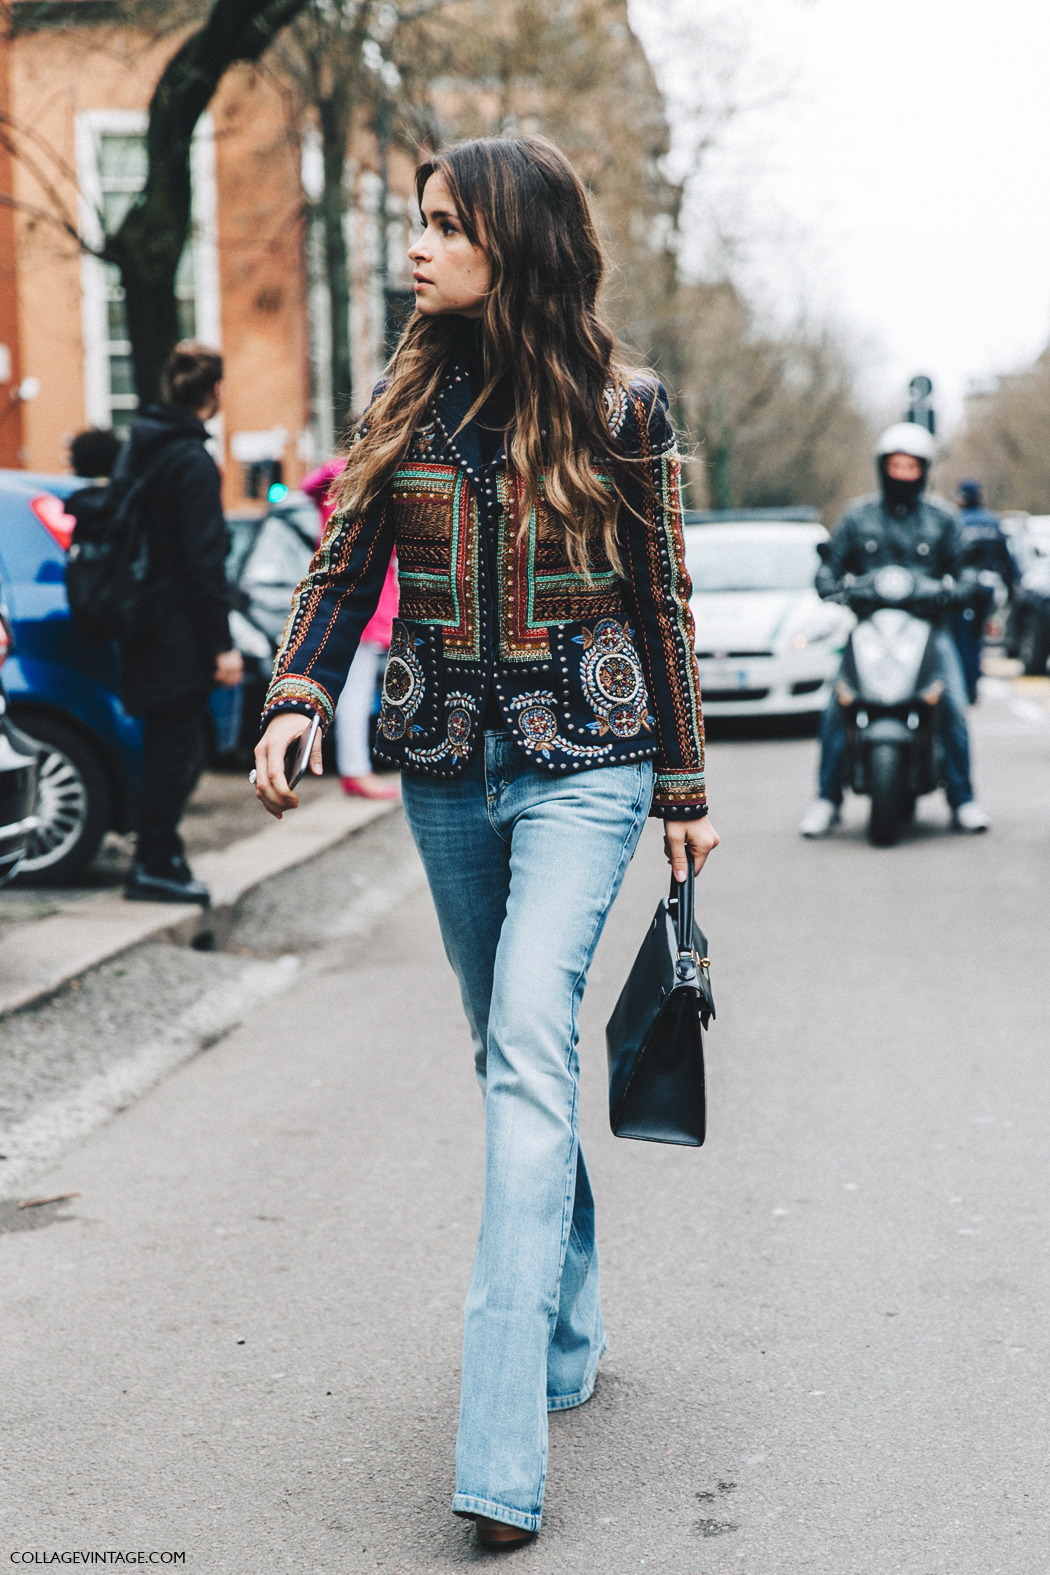 Milan_Fashion_Week_Fall_16-MFW-Street_Style-Collage_Vintage-Miroslava_Duma-Hermes_Bag-Embroidered_Jacket-Flared_Jeans-1